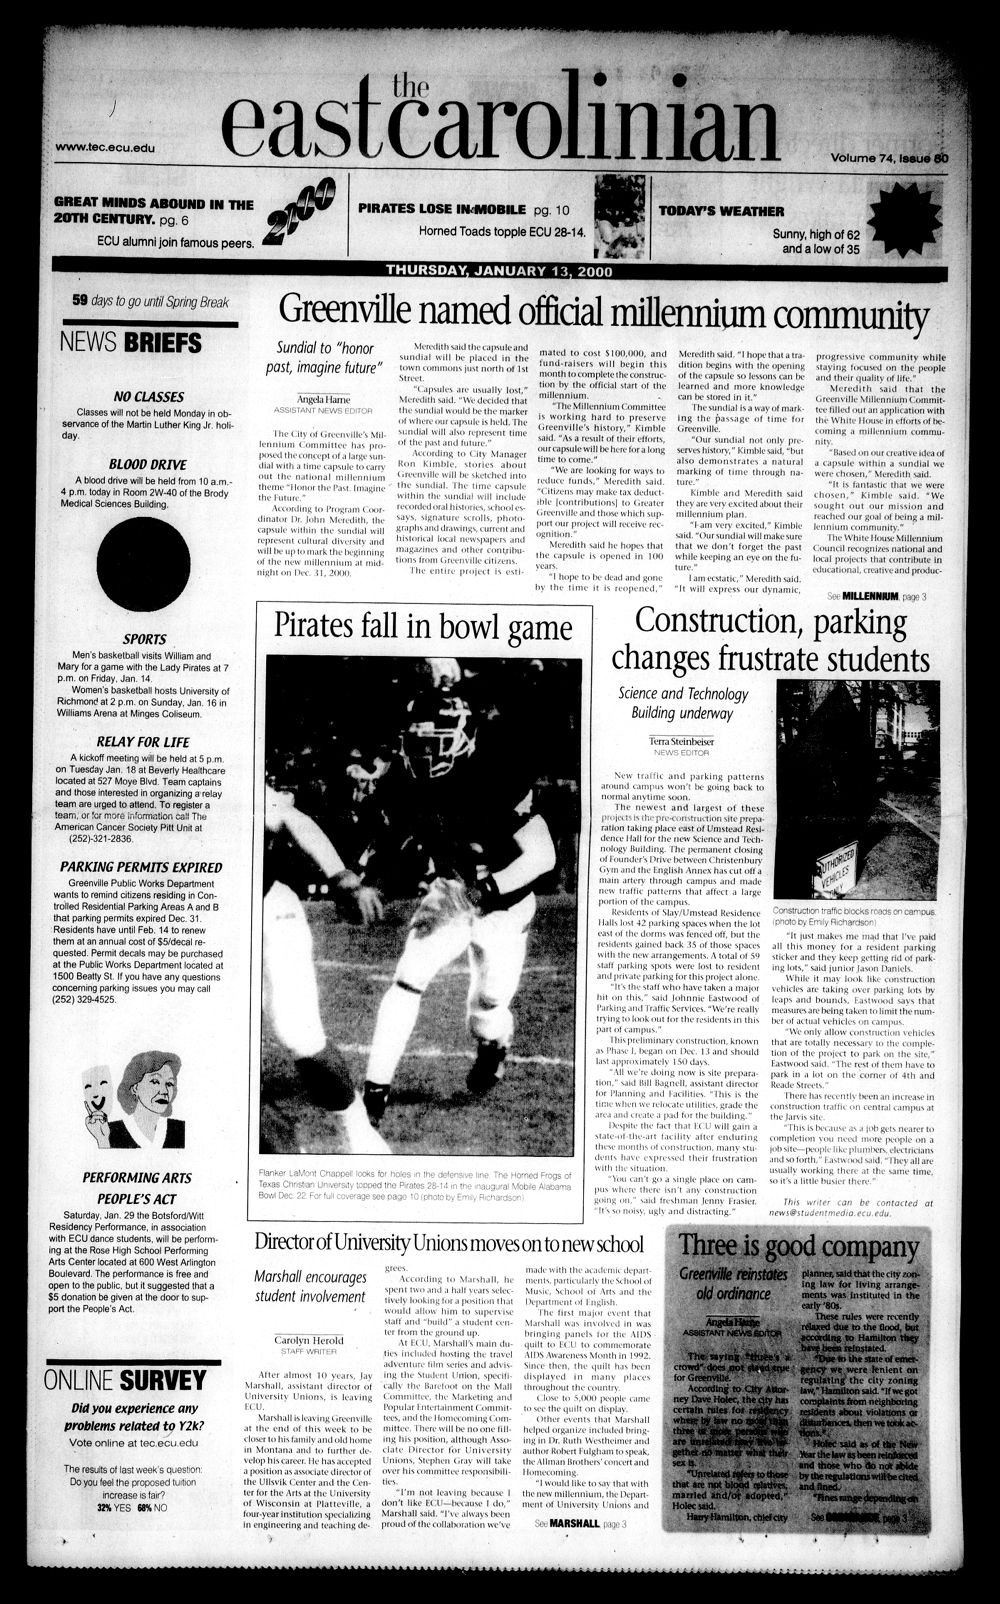 The East Carolinian, January 13, 2000 picture